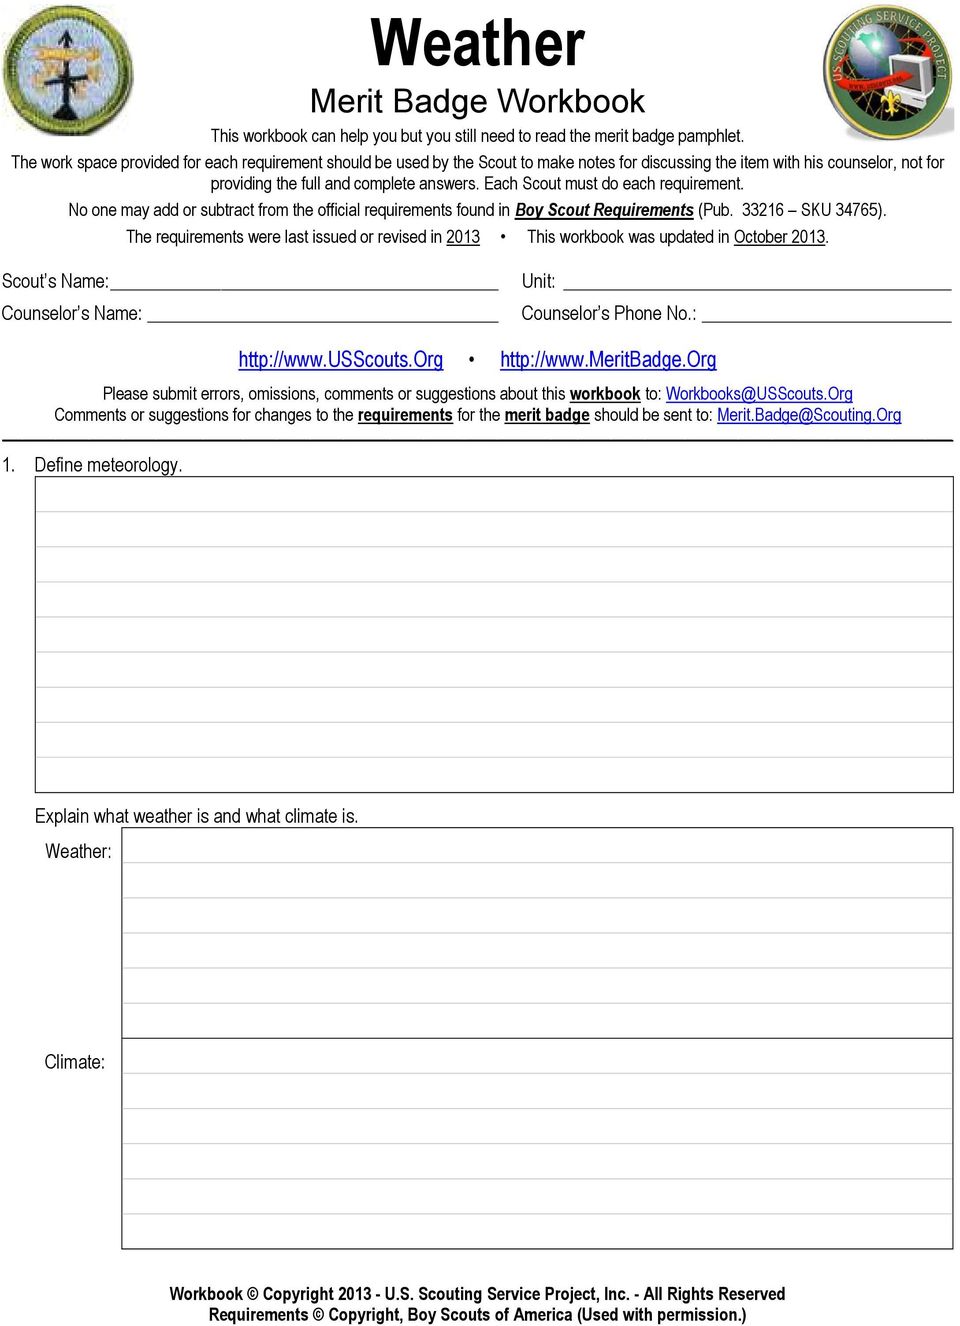 Weather Merit Badge Workbook - PDF Free Download Throughout Weather Merit Badge Worksheet